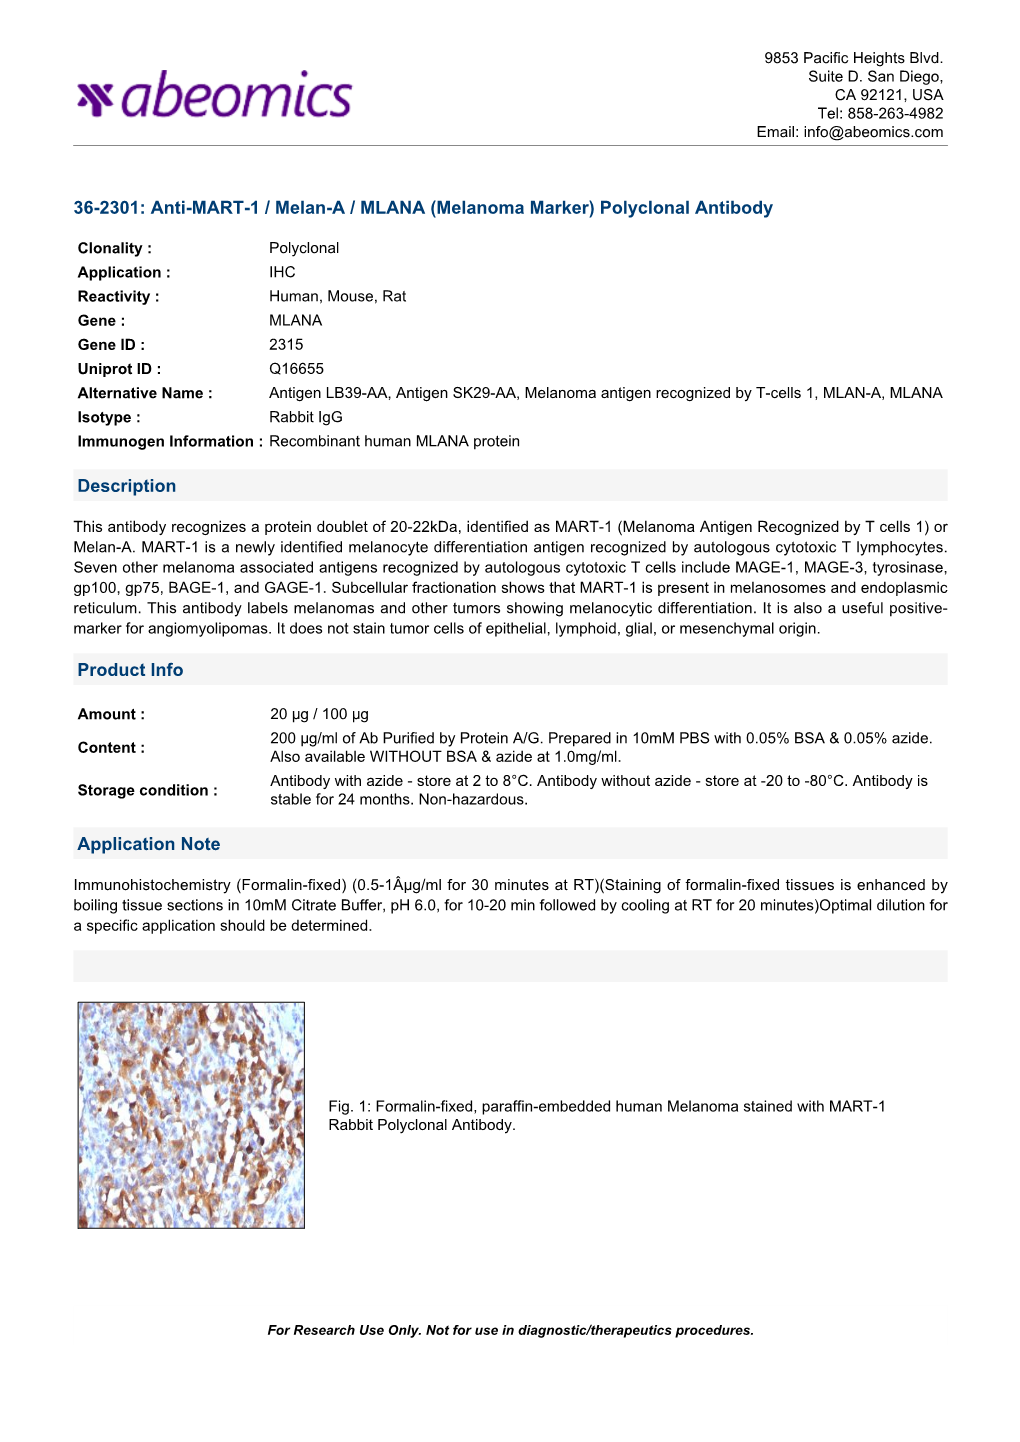 36-2301: Anti-MART-1 / Melan-A / MLANA (Melanoma Marker) Polyclonal Antibody Description Product Info Application Note